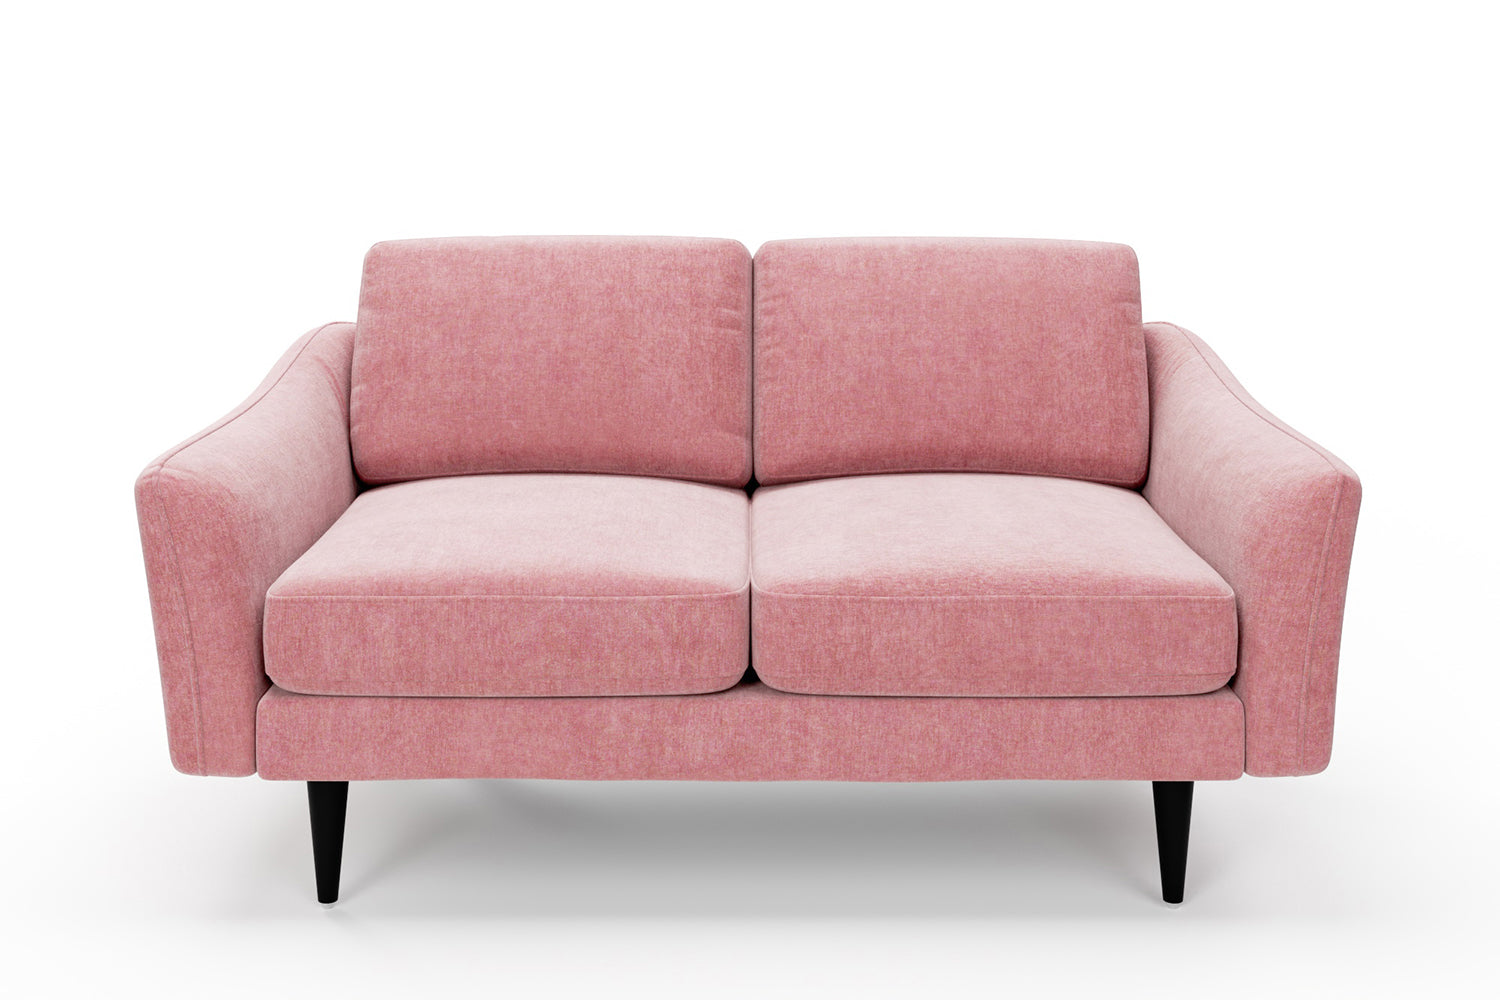 SNUG | The Rebel 2 Seater Sofa in Blush Coral variant_40621896138800